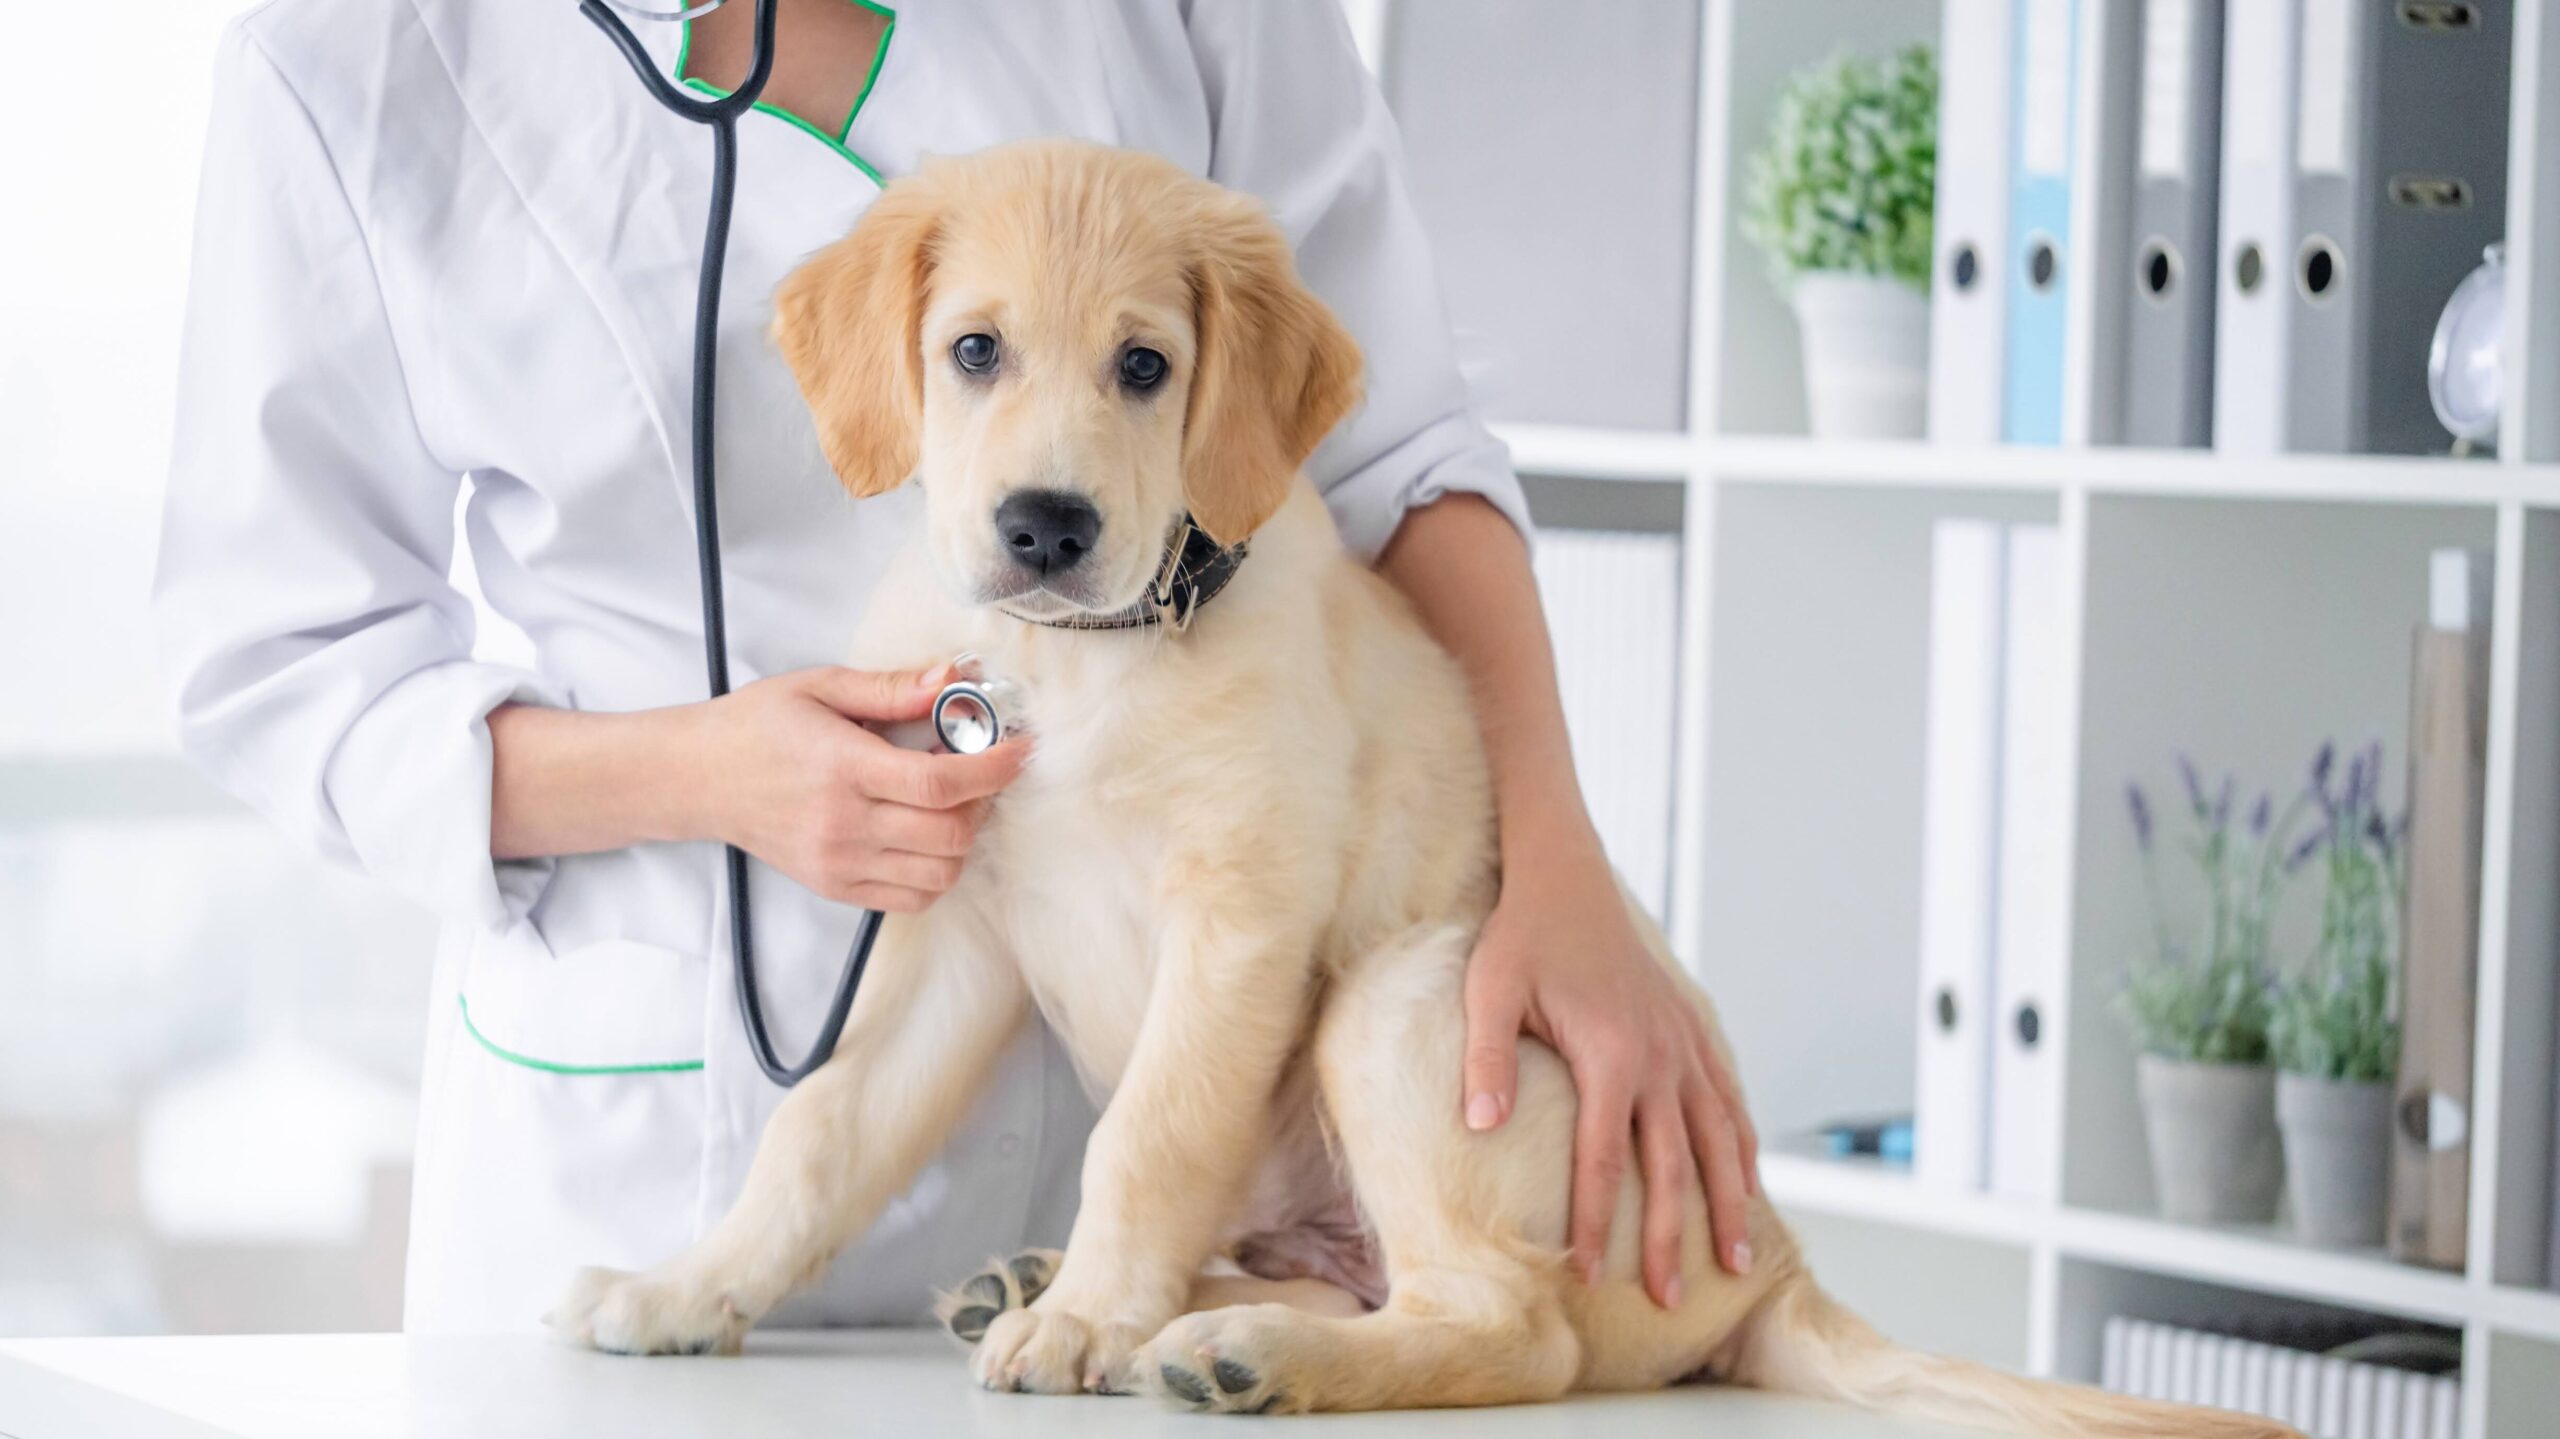 Examining of lovely dog by stethoscope in vet clinic